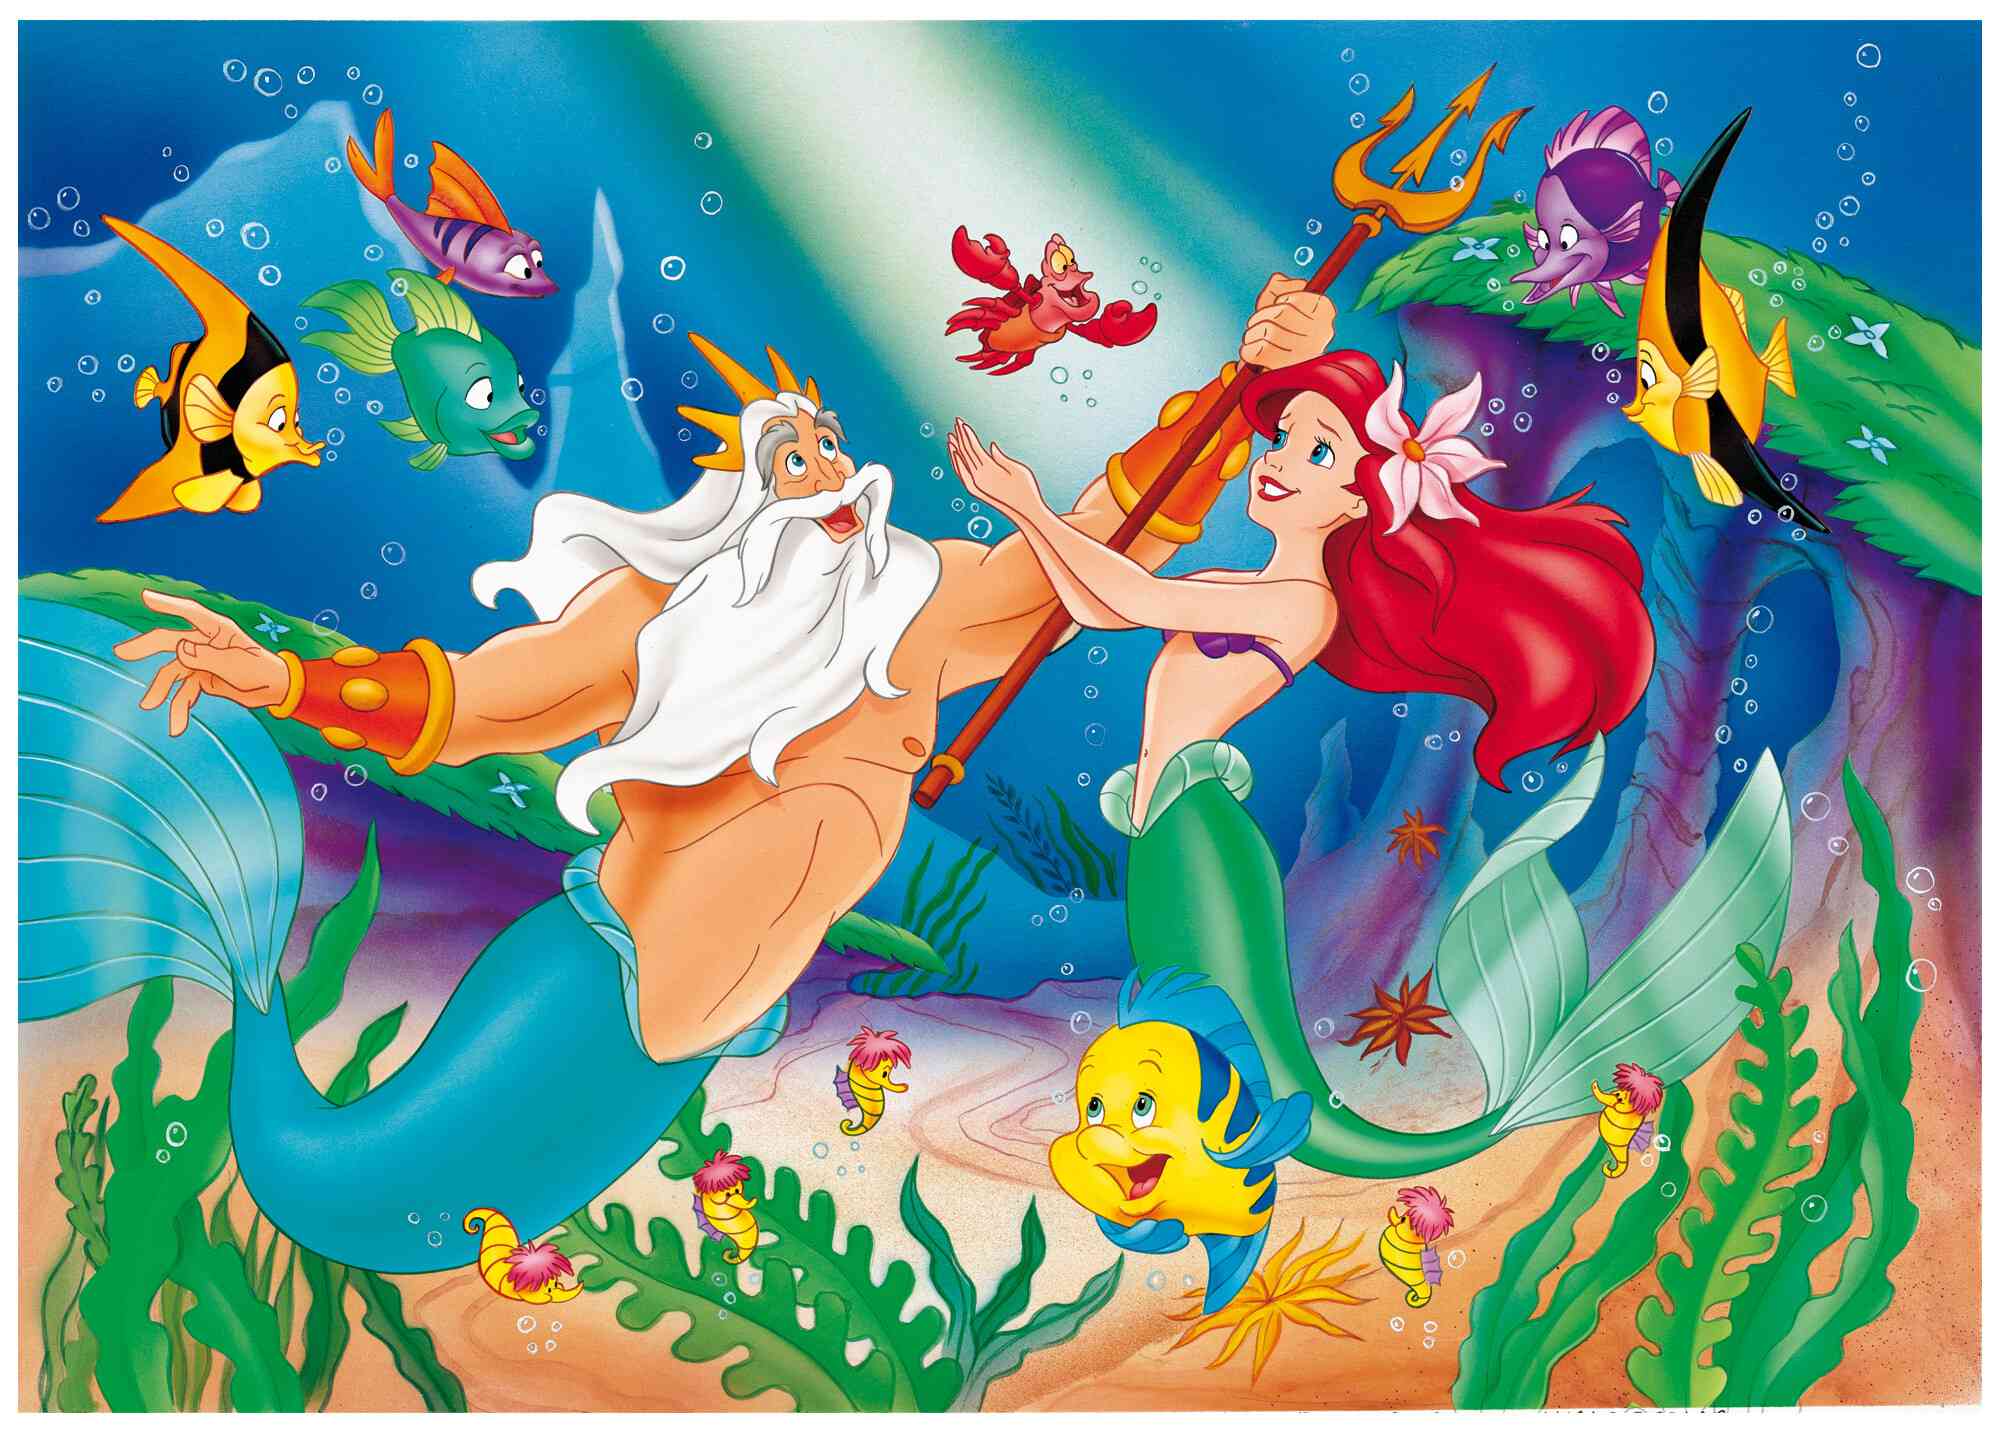 Disney puzzle df maxi floor 108 the little mermaid - DISNEY PRINCESS, LISCIANI